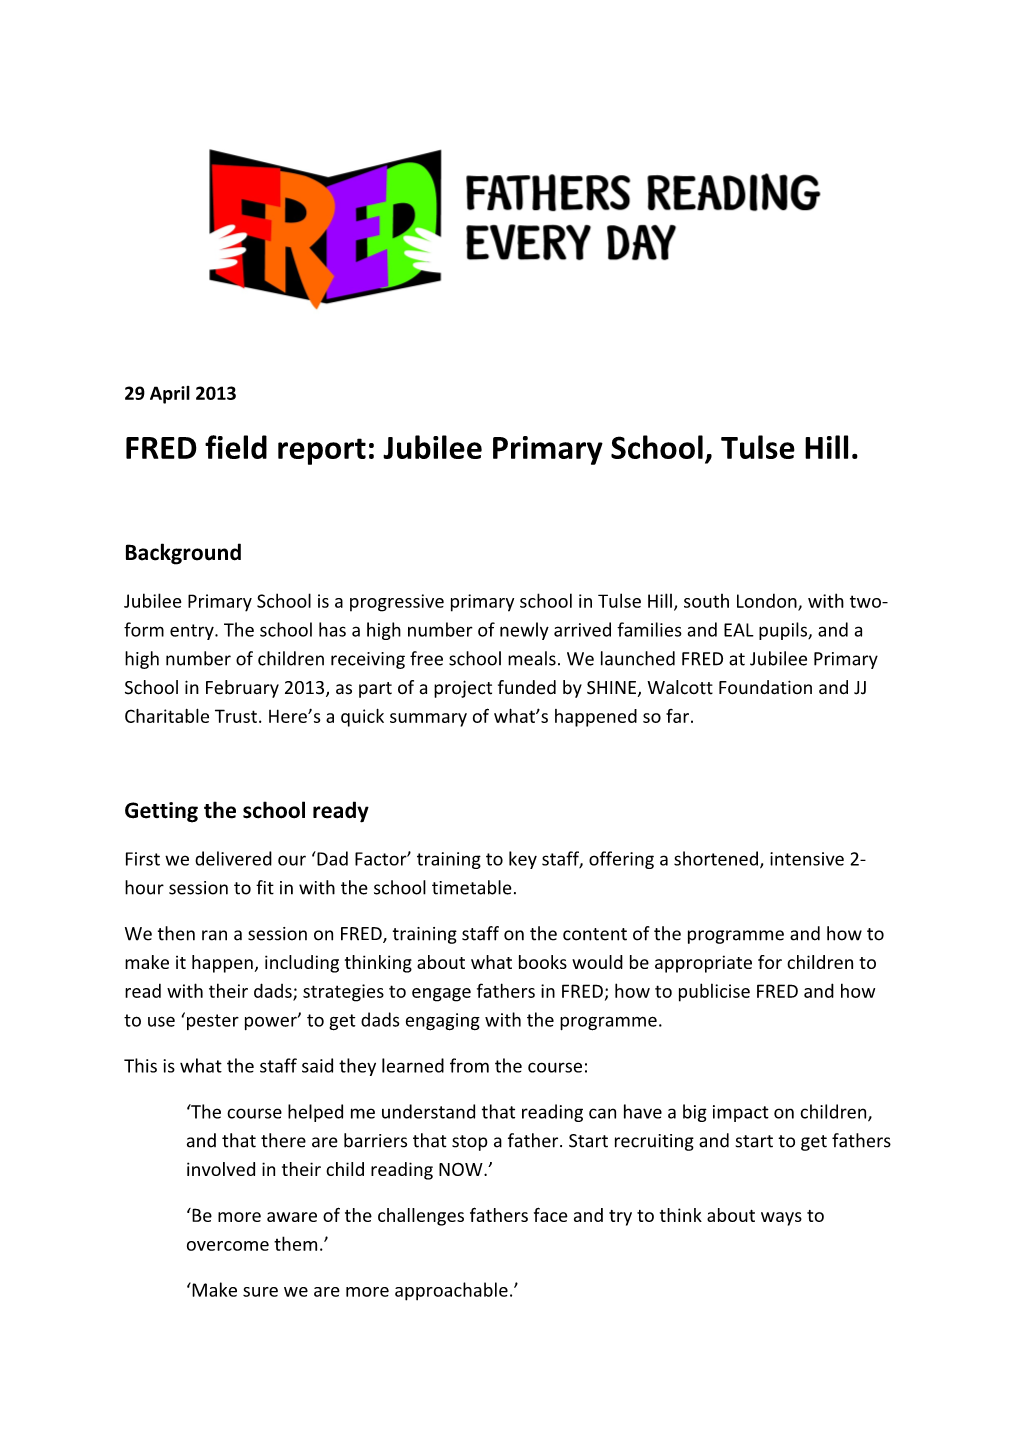 FRED Field Report: Jubilee Primary School, Tulse Hill